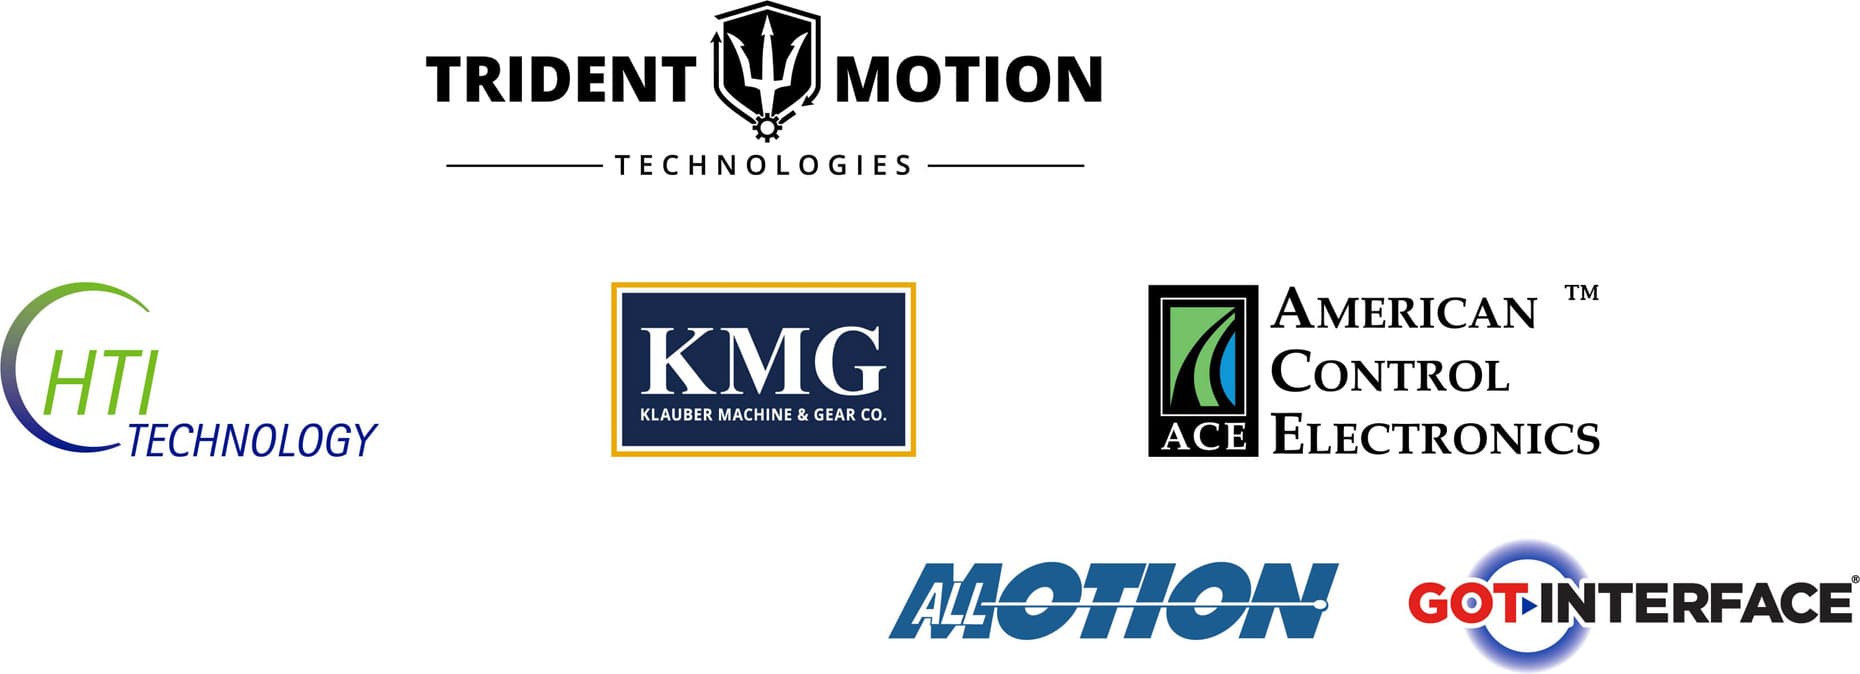 Trident Motion Technologies logo, HTI Technology logo, KMG Klauber Machine & Gear Co. Logo, American Control Electronics logo, AllMotion logo, GOT Interface logo